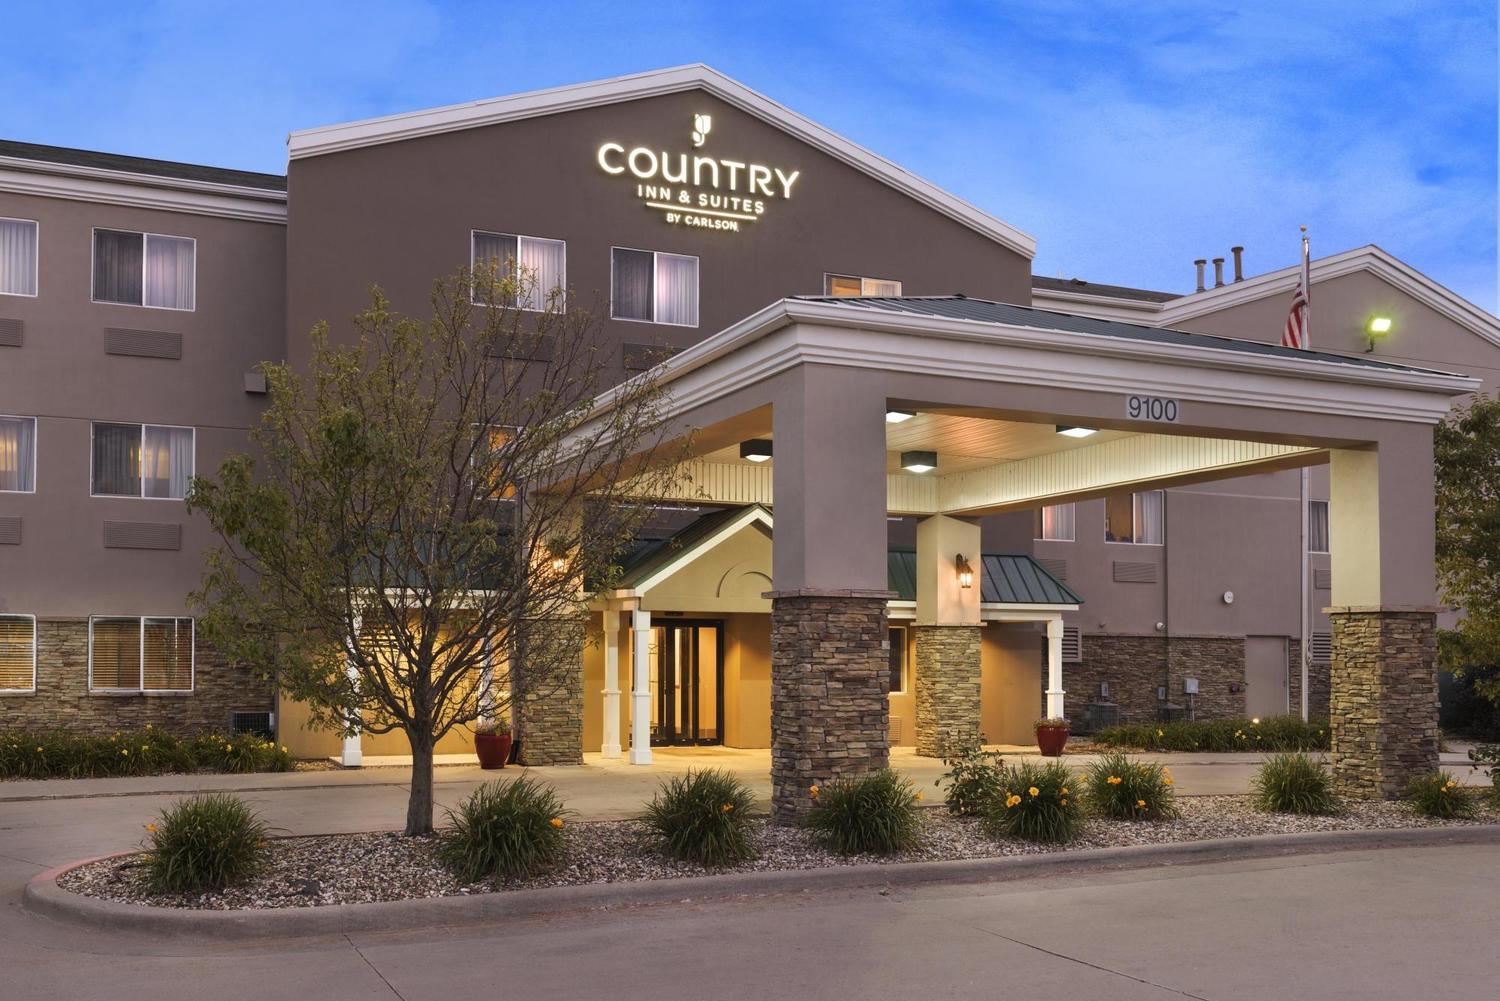 Country Inn & Suites by Radisson, Cedar Rapids Airport.